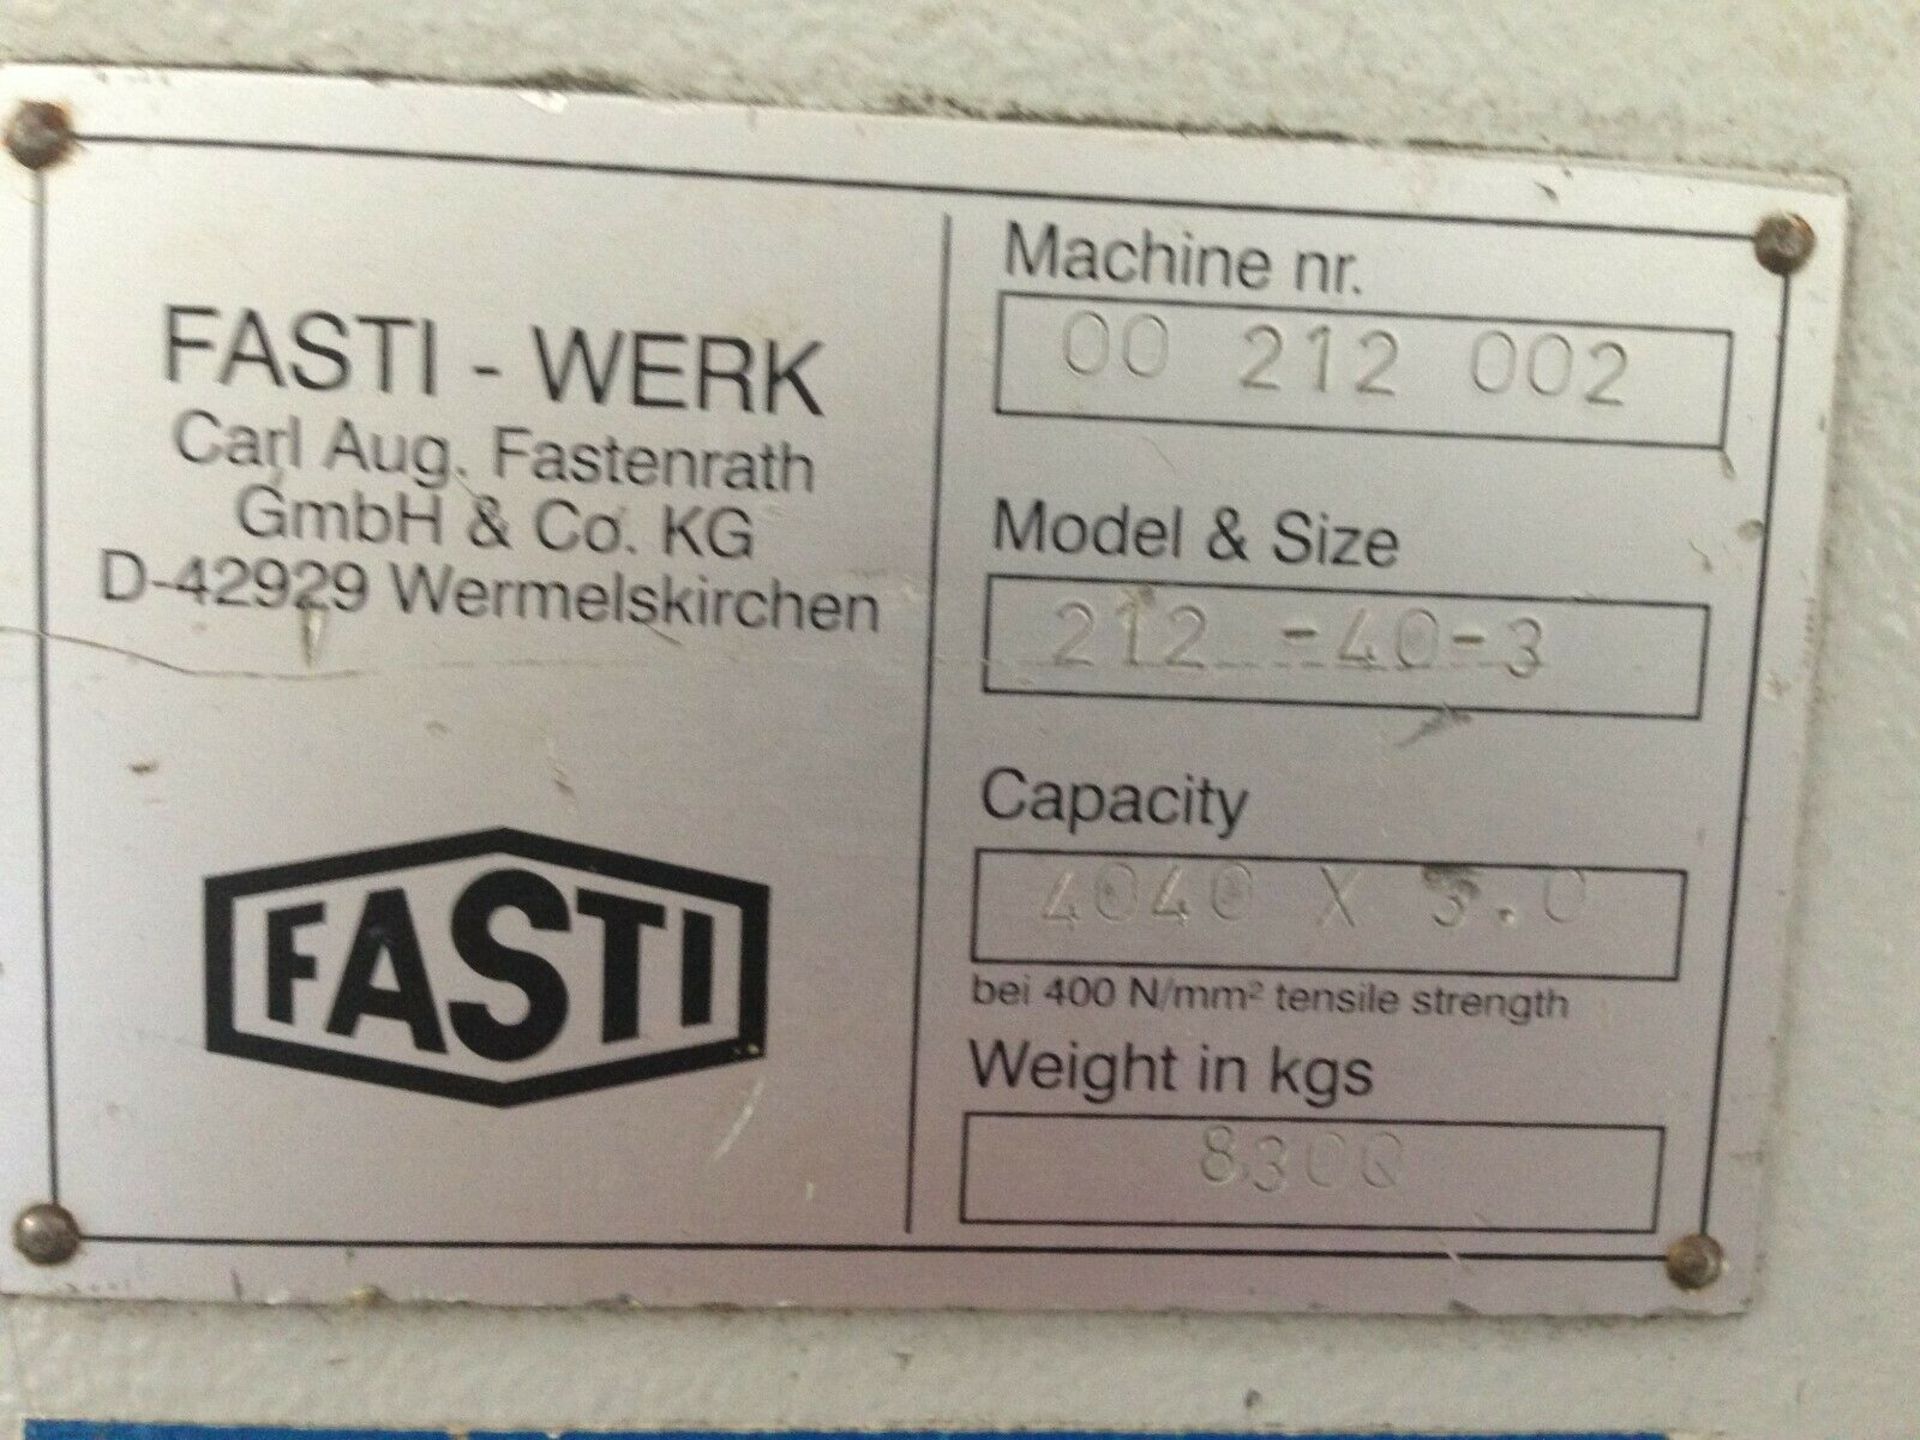 2000 CNC Fasti 212-40-3 Metal Panel Folder - Image 3 of 8